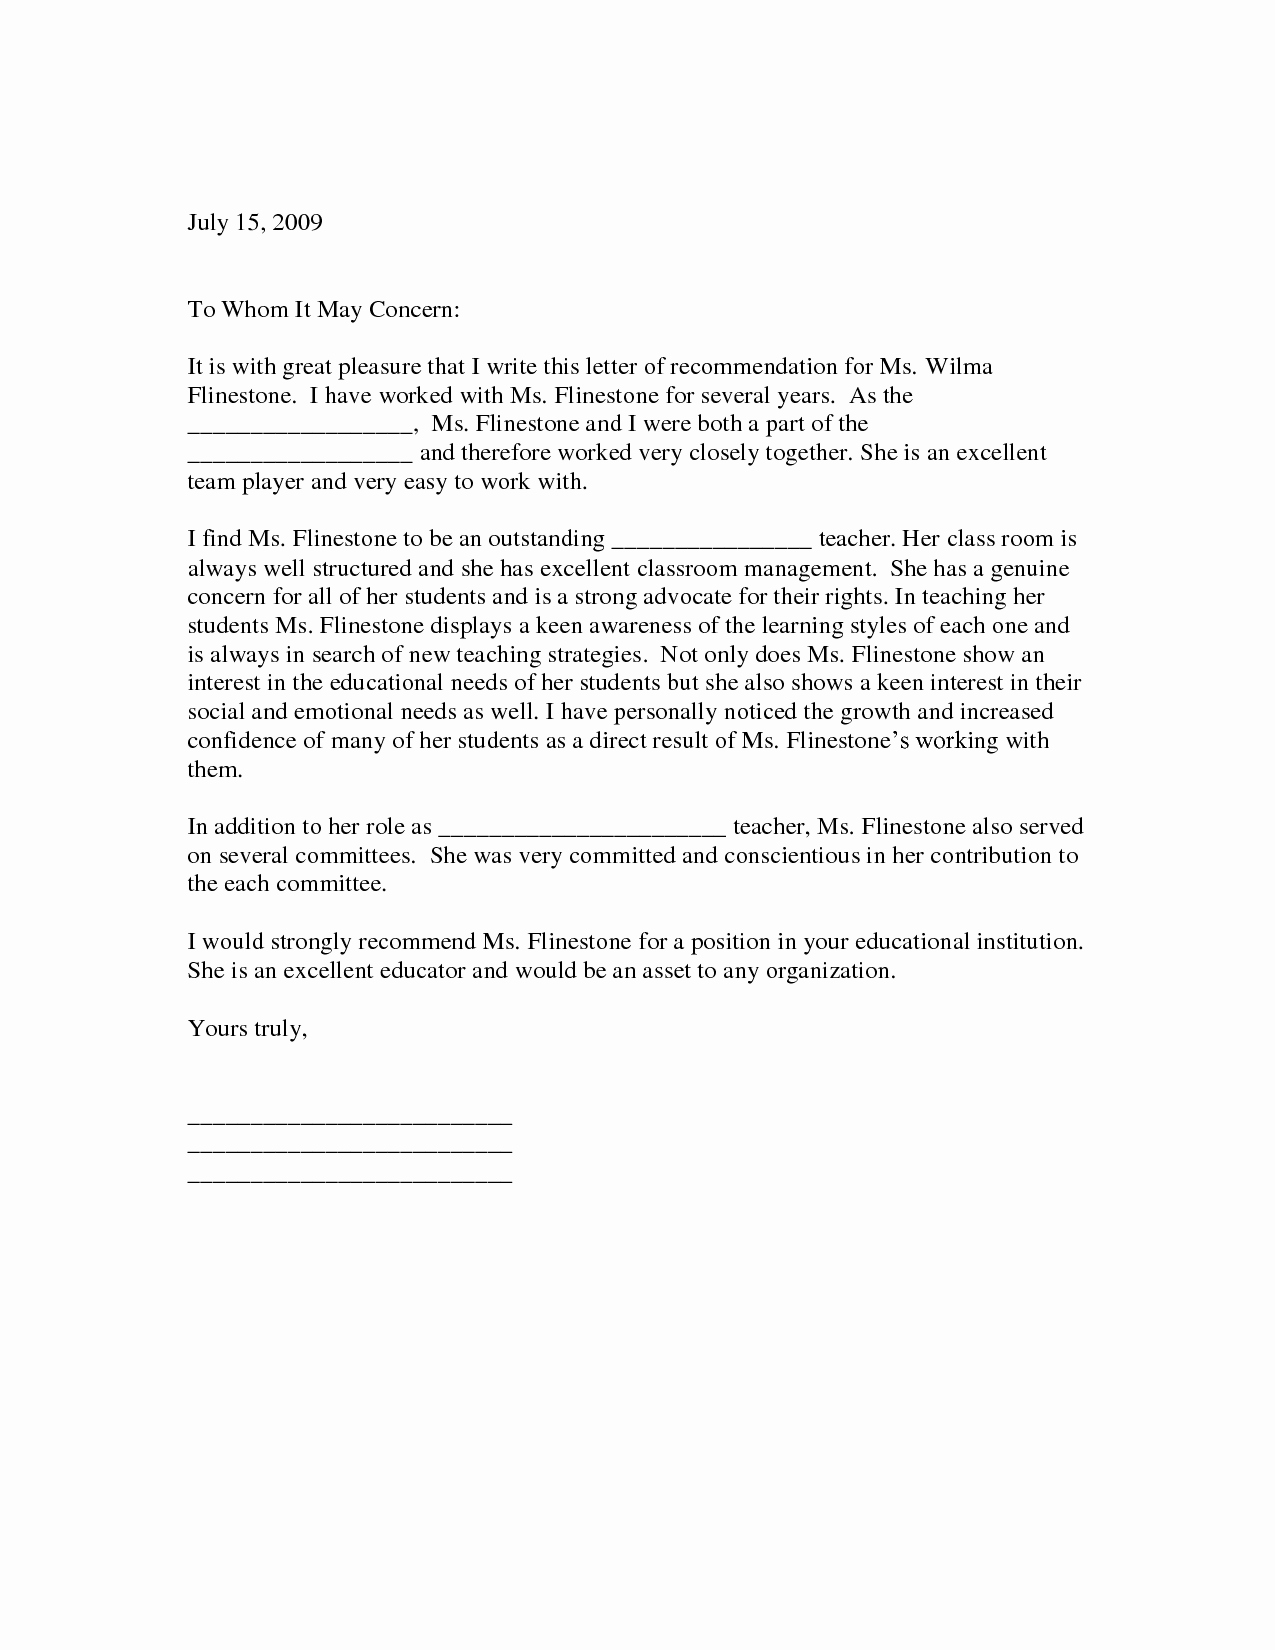 Teacher Letter Of Recommendation Template Luxury Sample Letter Of Re Mendation for Teacher